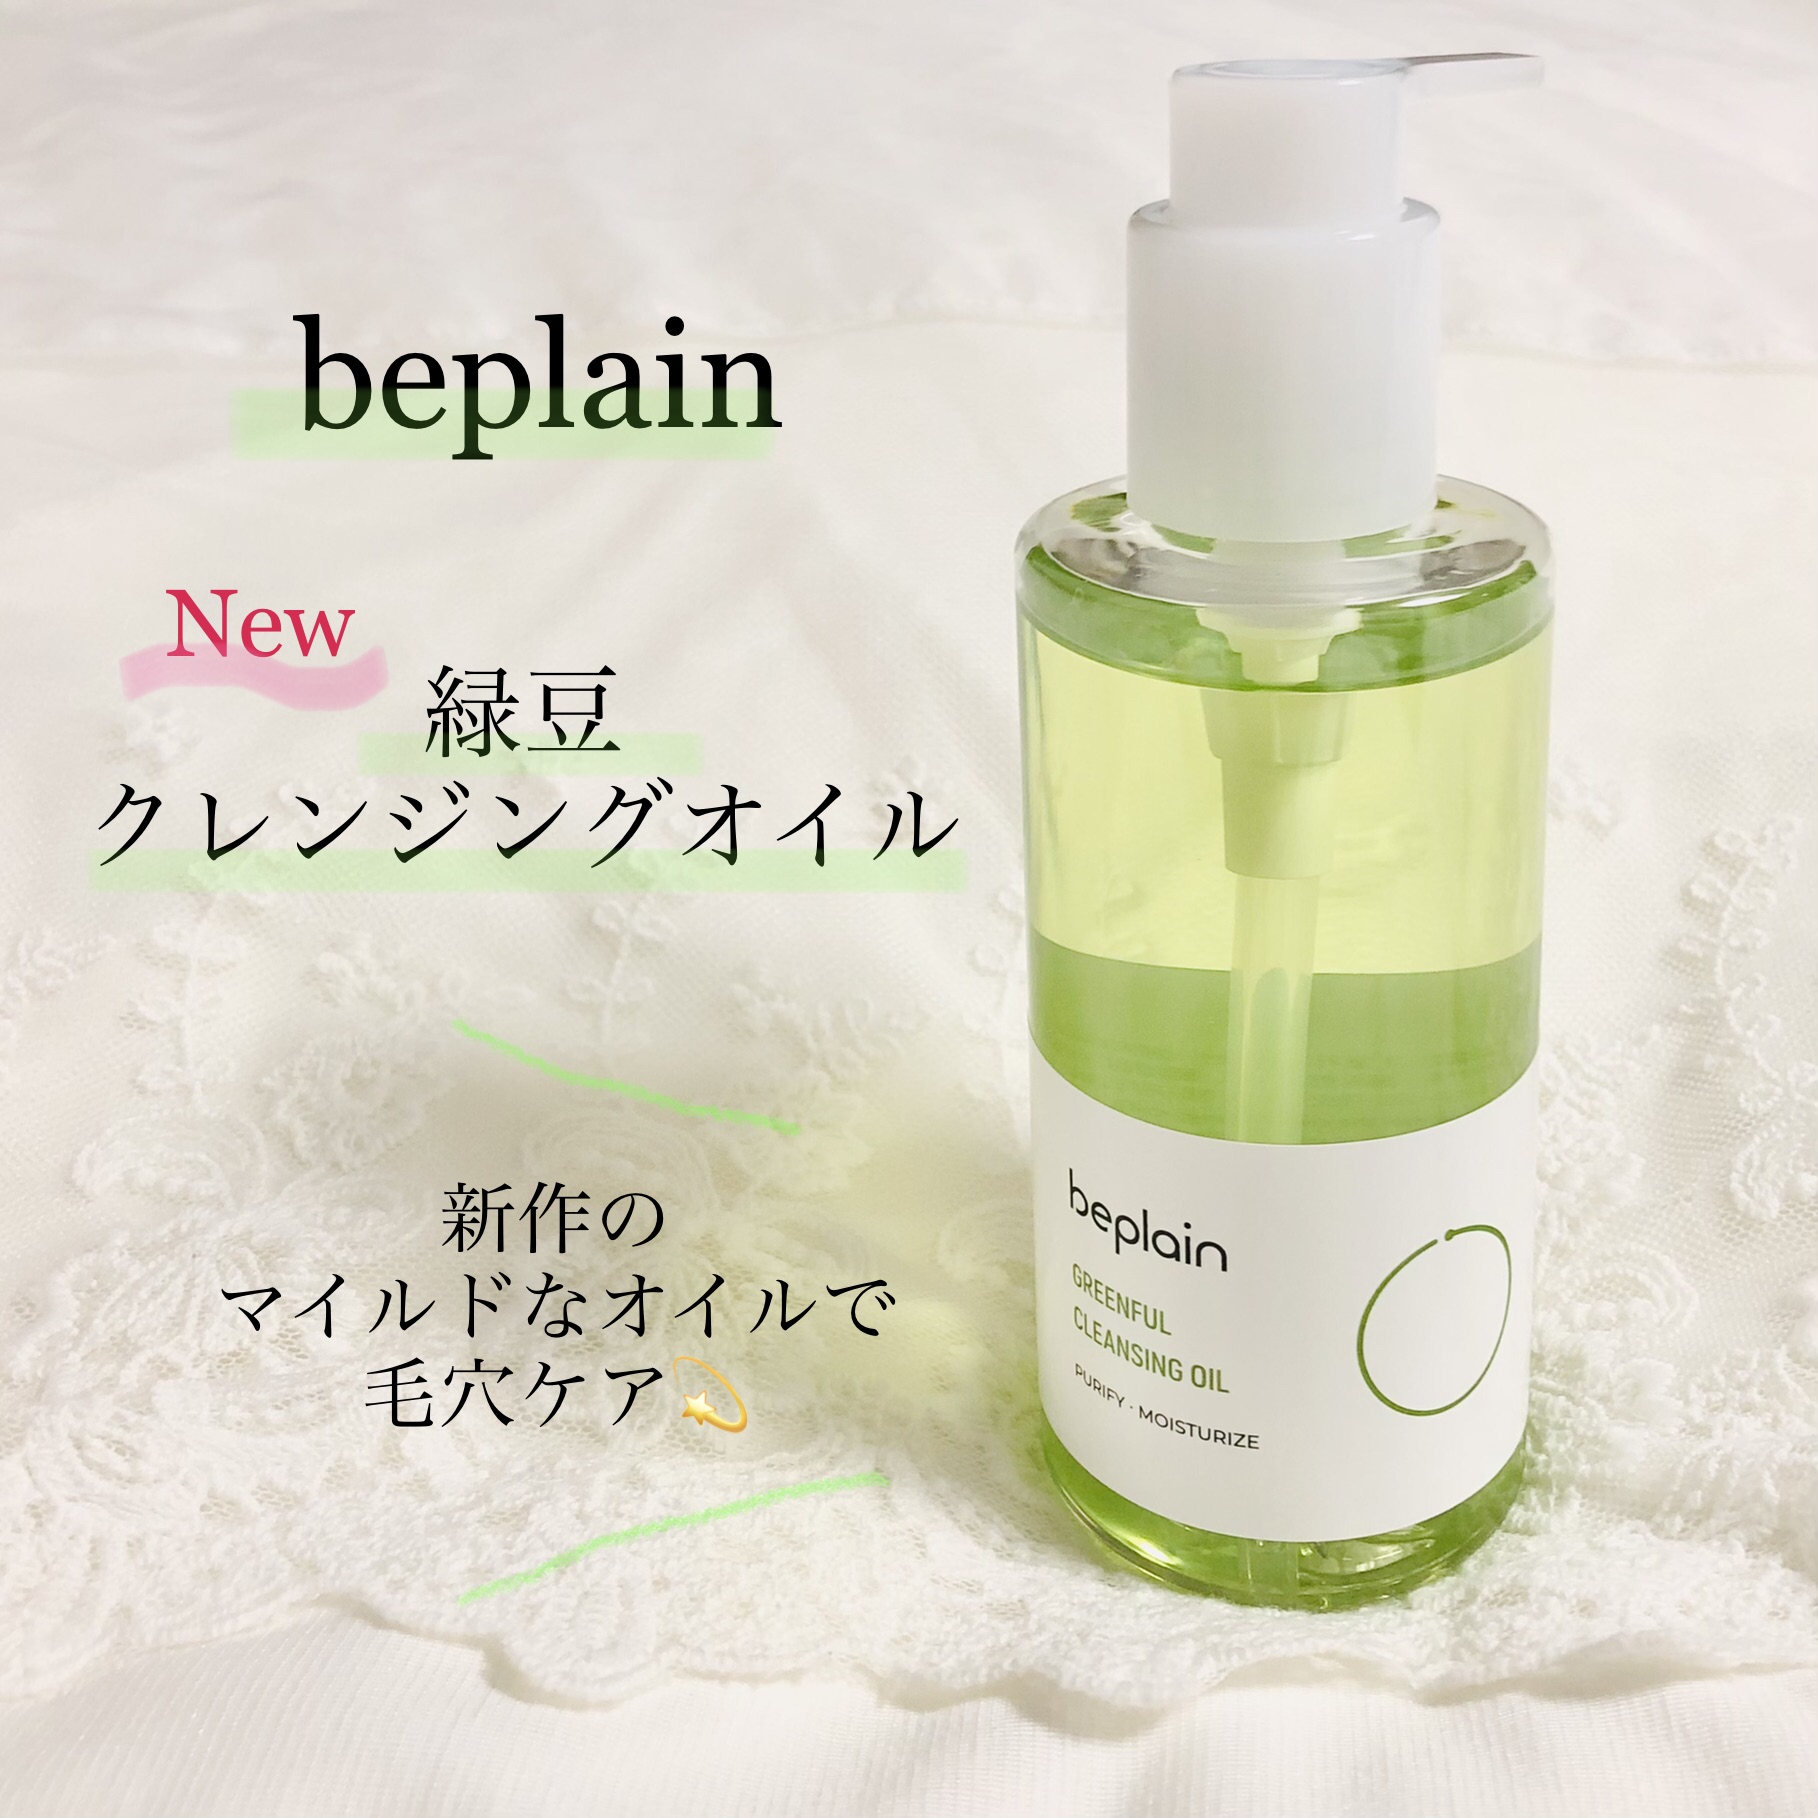 beplain(ビープレーン) 緑豆クレンジングオイルの良い点・メリットに関するさっくさんの口コミ画像1